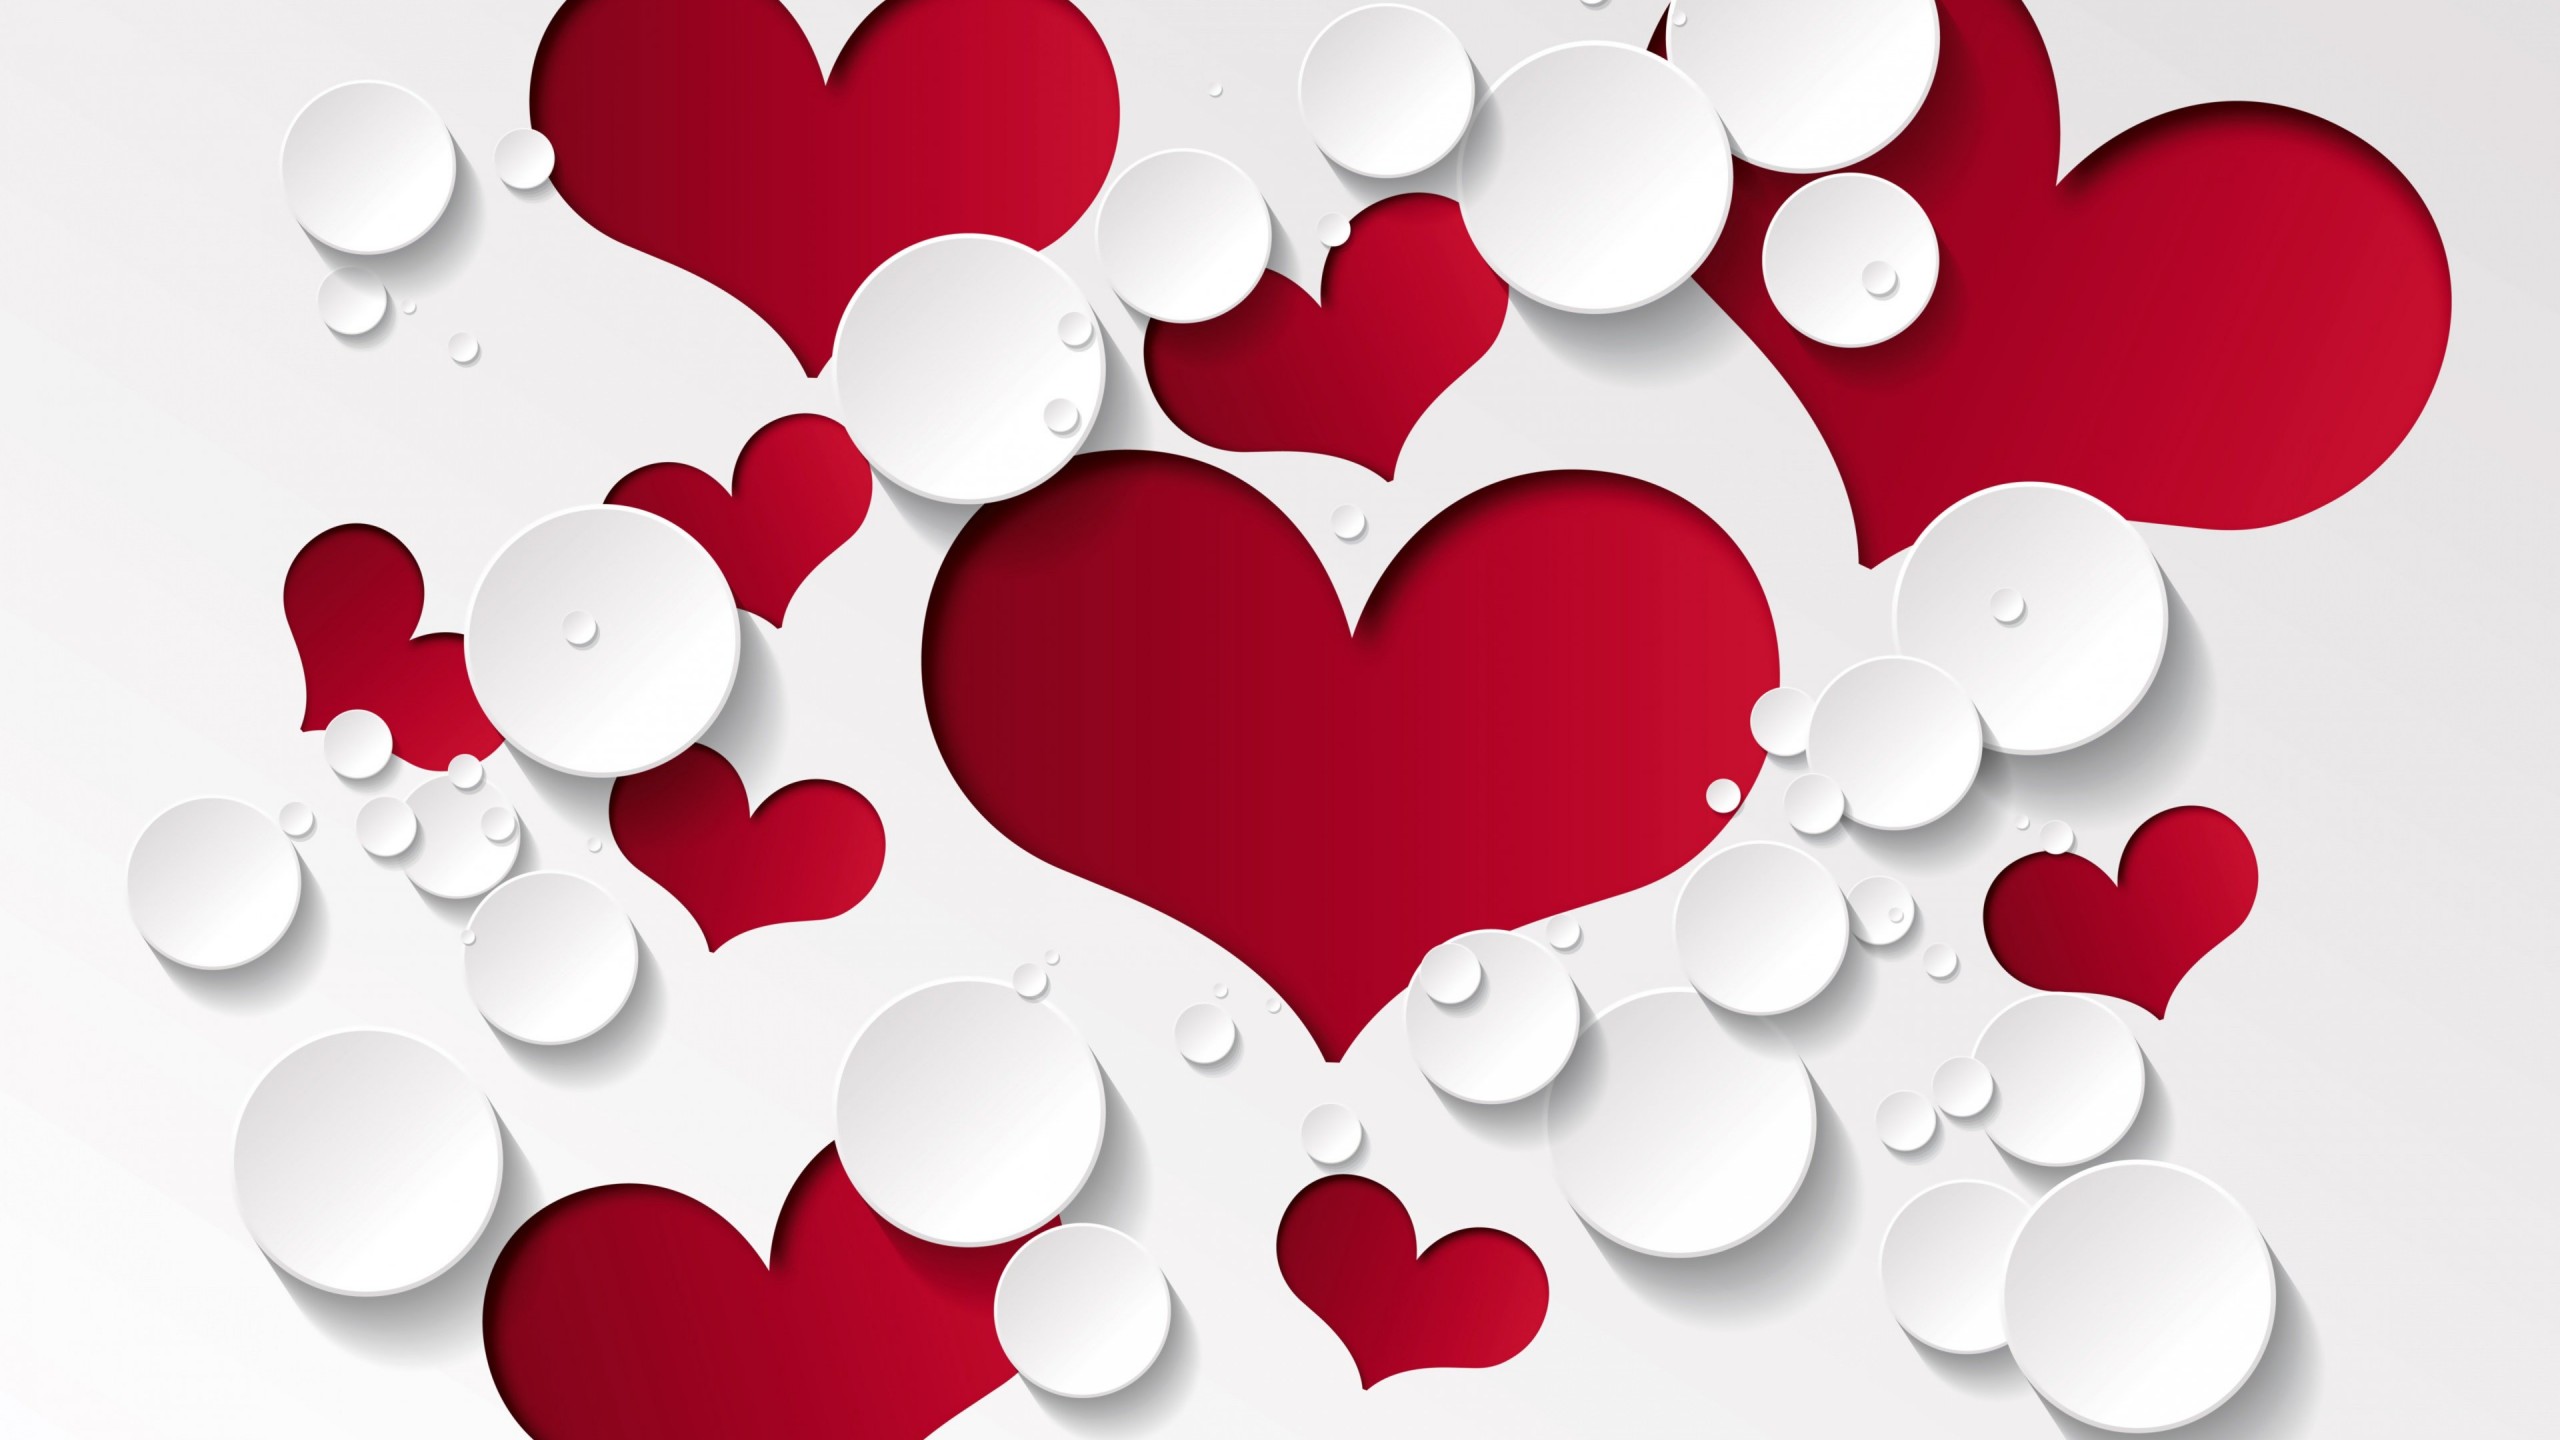 Love Heart Shaped Pattern Wallpaper for Social Media YouTube Channel Art